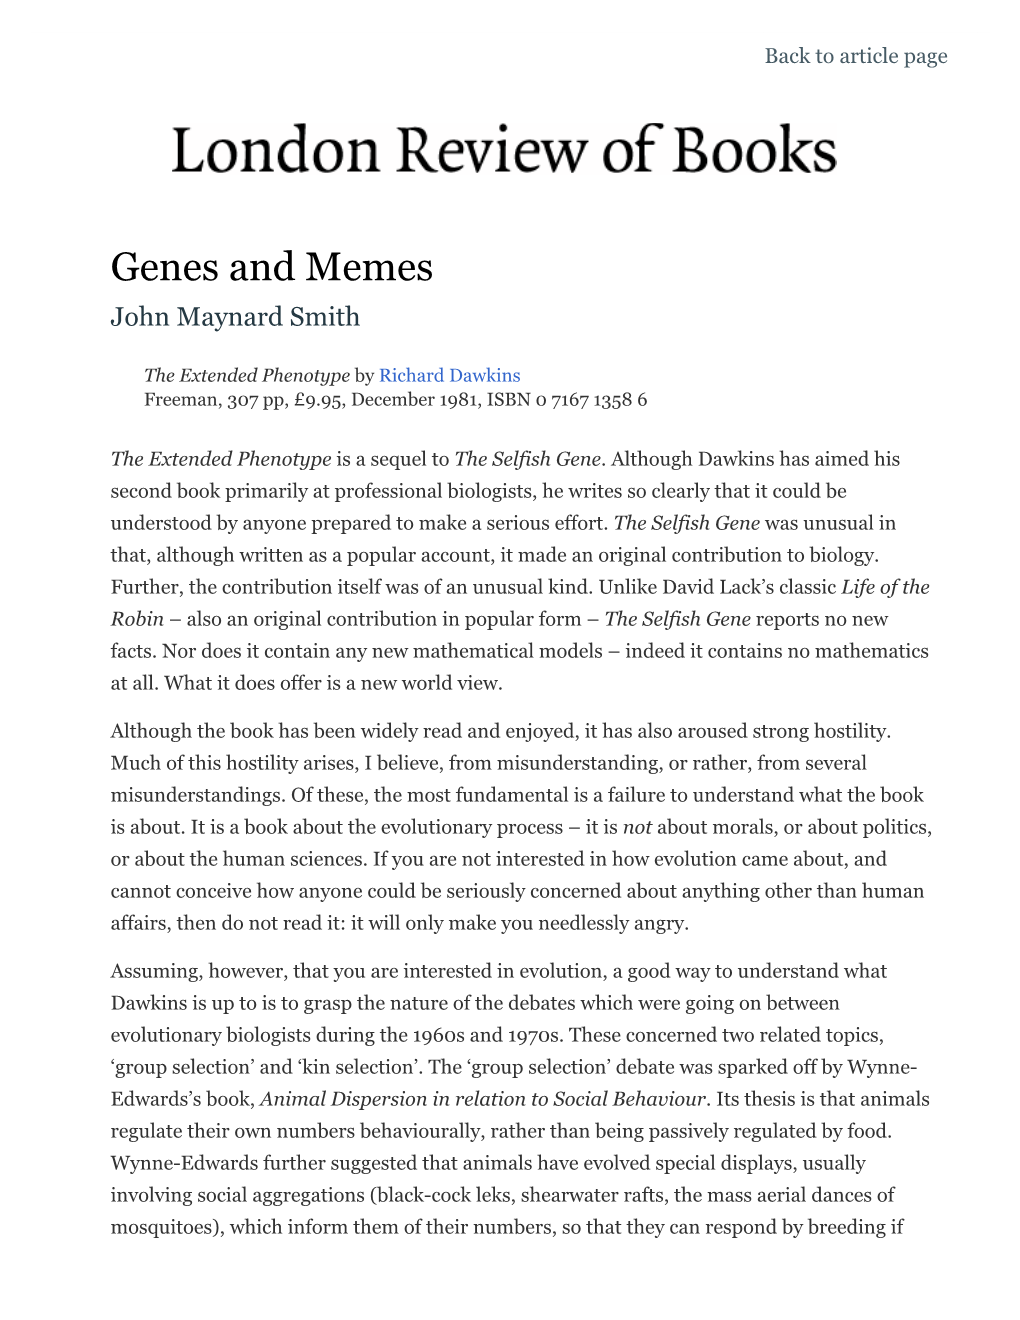 John Maynard Smith Reviews 'The Extended Phenotype' by Richard